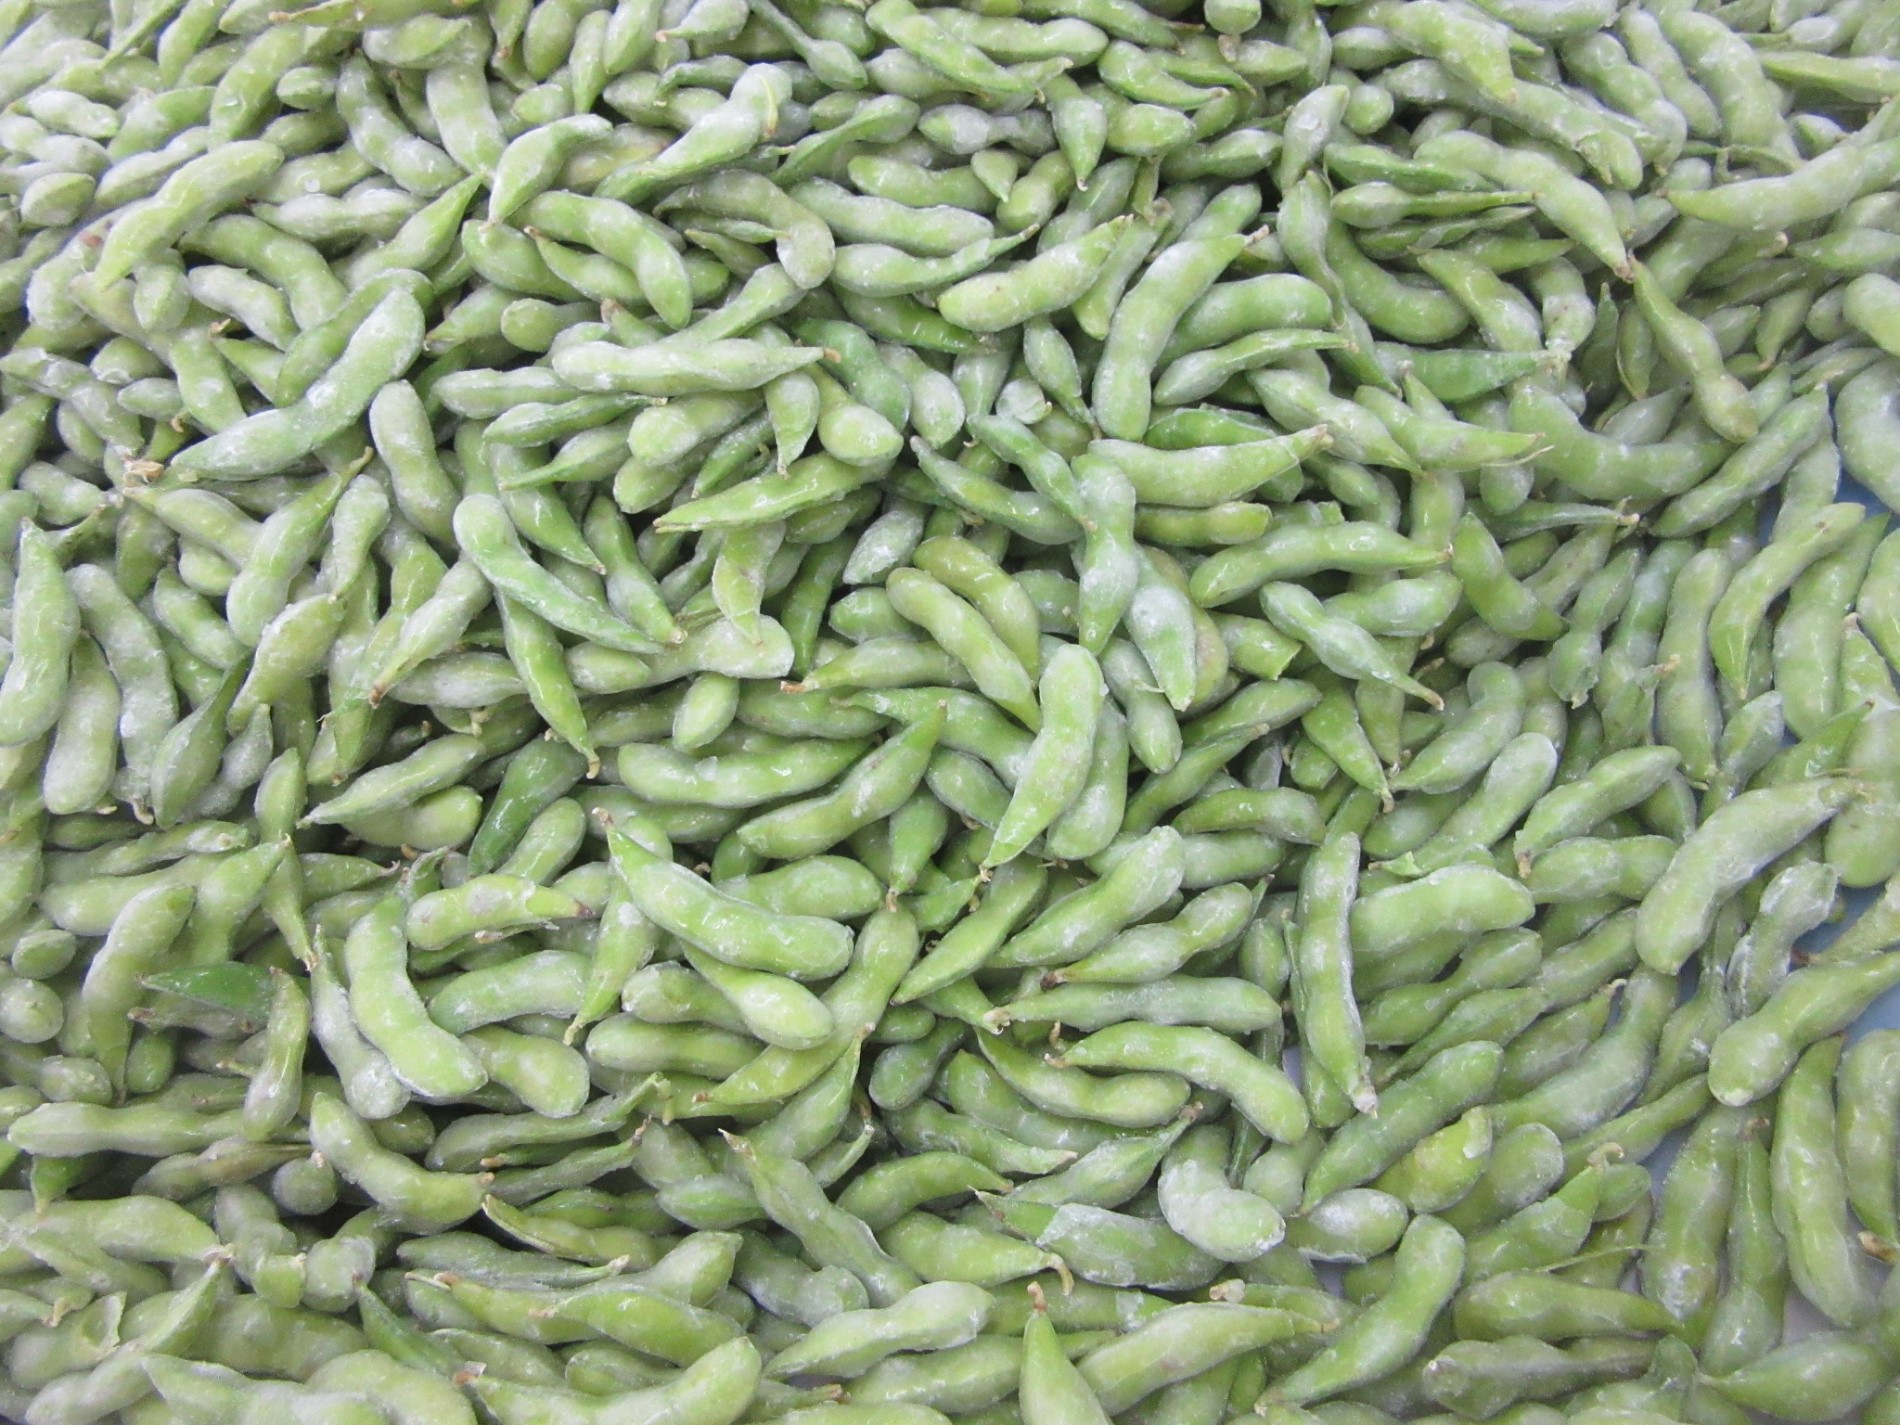 IQF Frozen Organic Edamame Beans Manufacturers, IQF Frozen Organic Edamame Beans Factory, Supply IQF Frozen Organic Edamame Beans